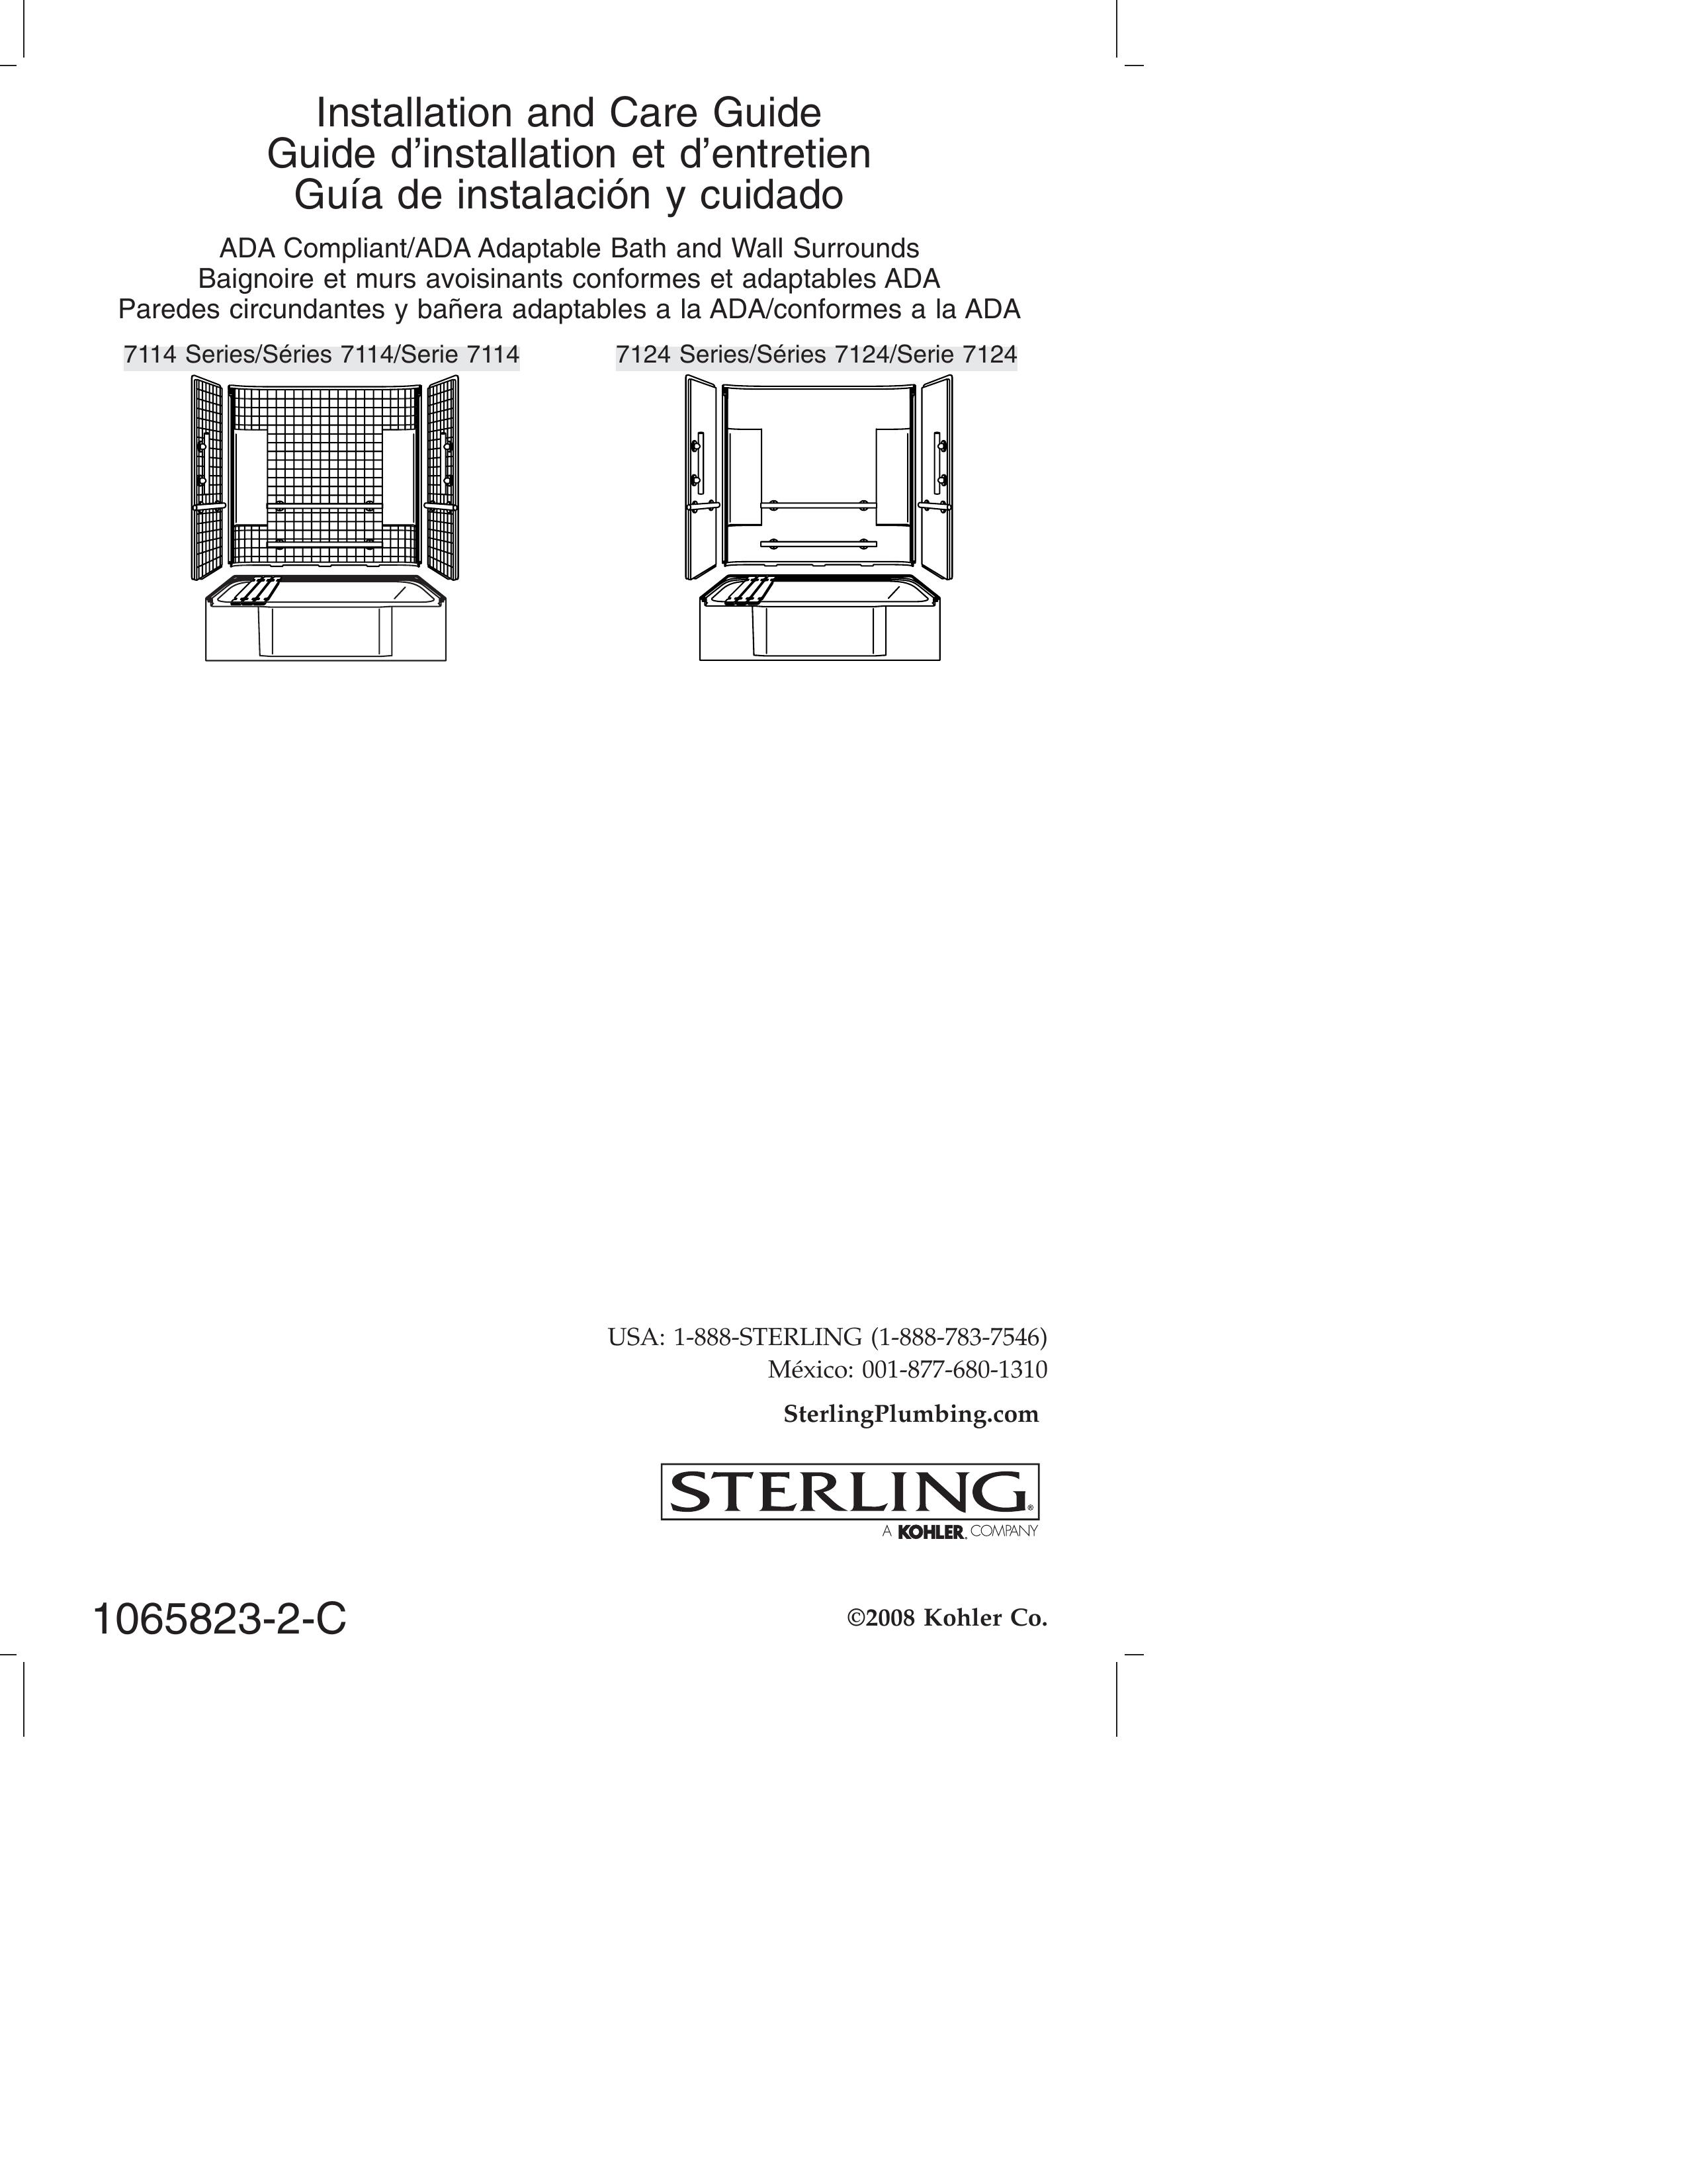 Sterling Plumbing 7114 Series Hot Tub User Manual